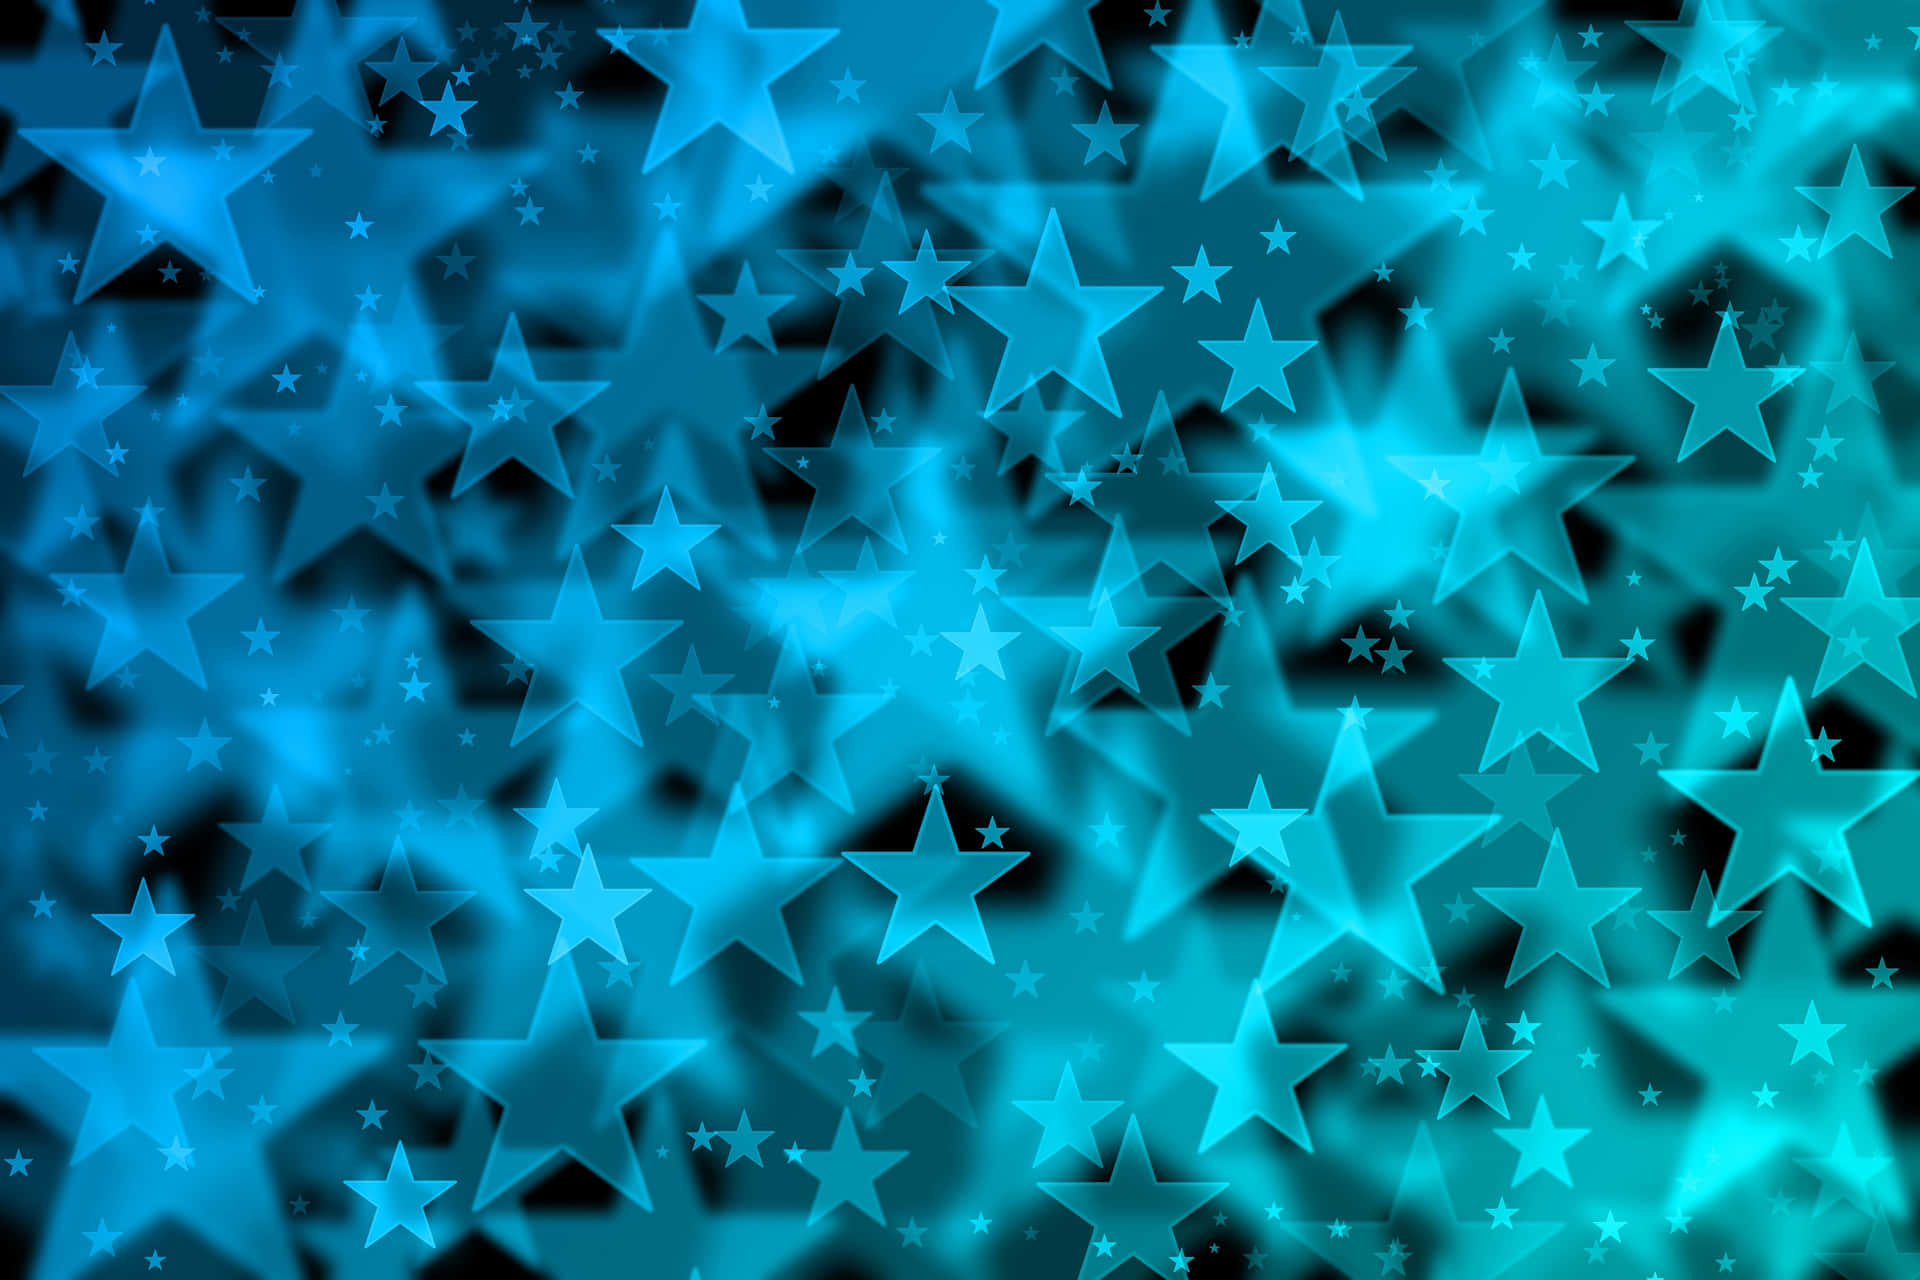 Stunning 3D Star in a Dynamic Galaxy Wallpaper